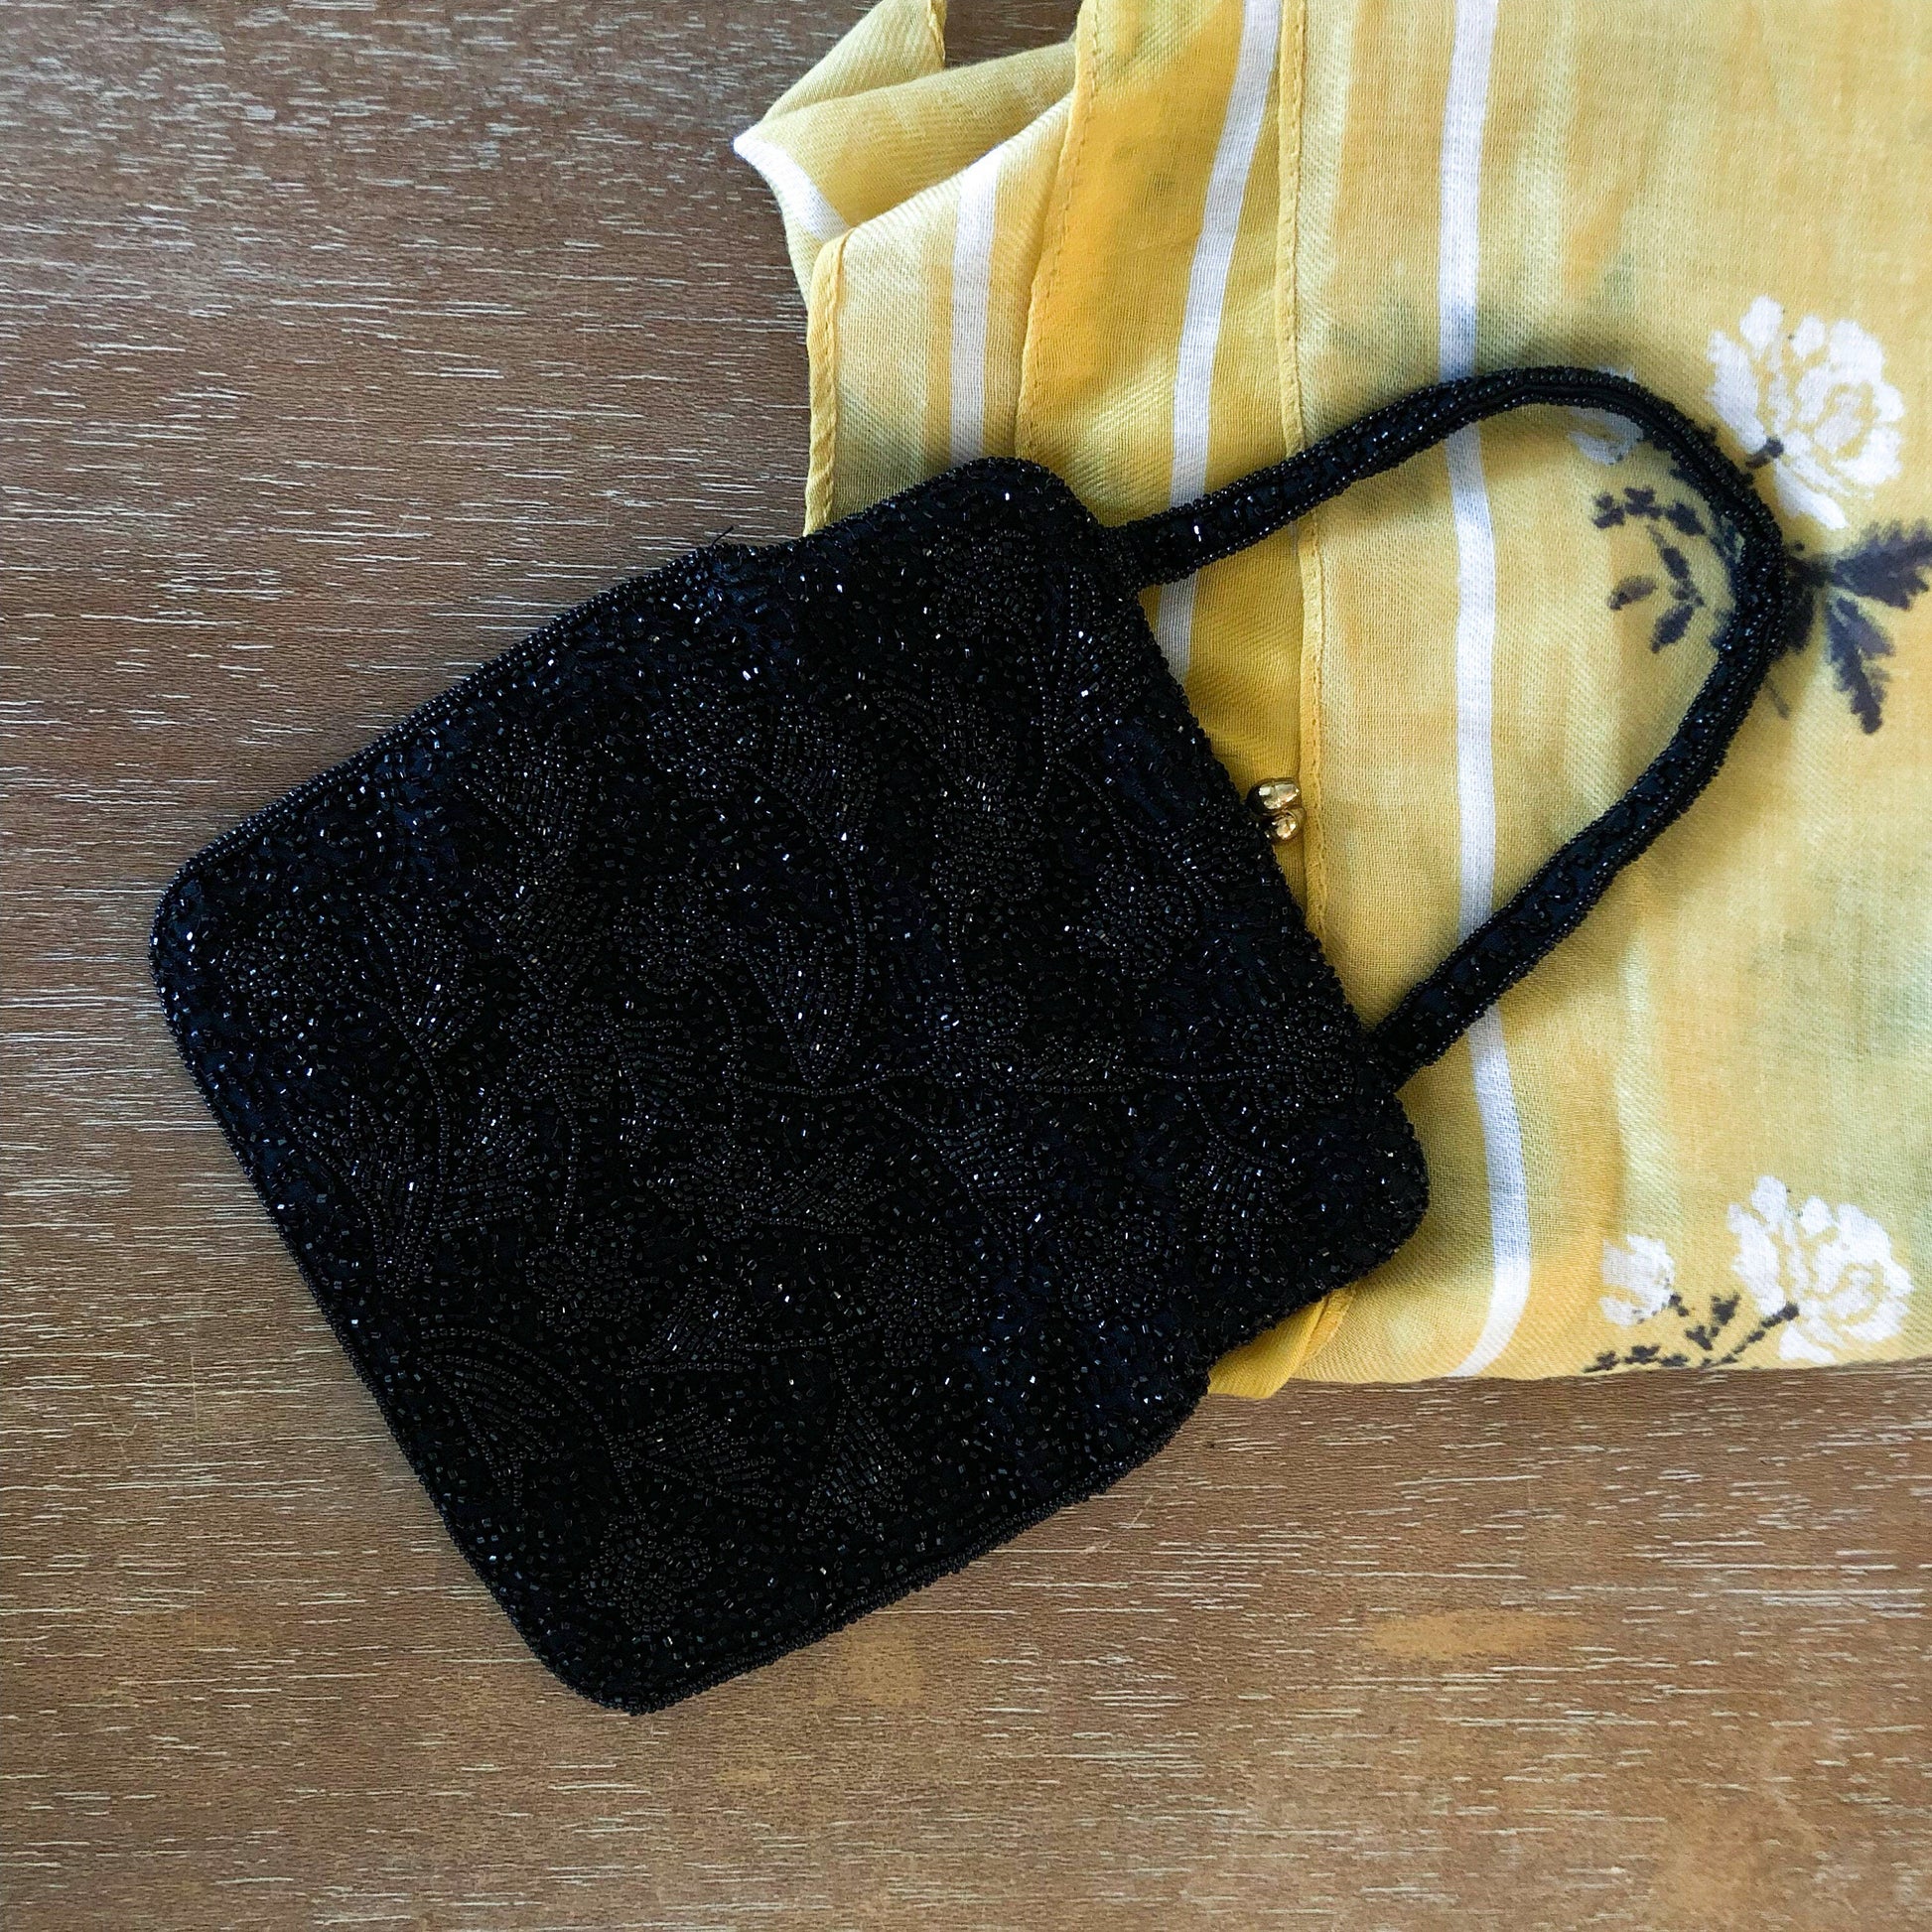 DIY Crochet Purse | The BagSmith, Our Original Little Bag Purse